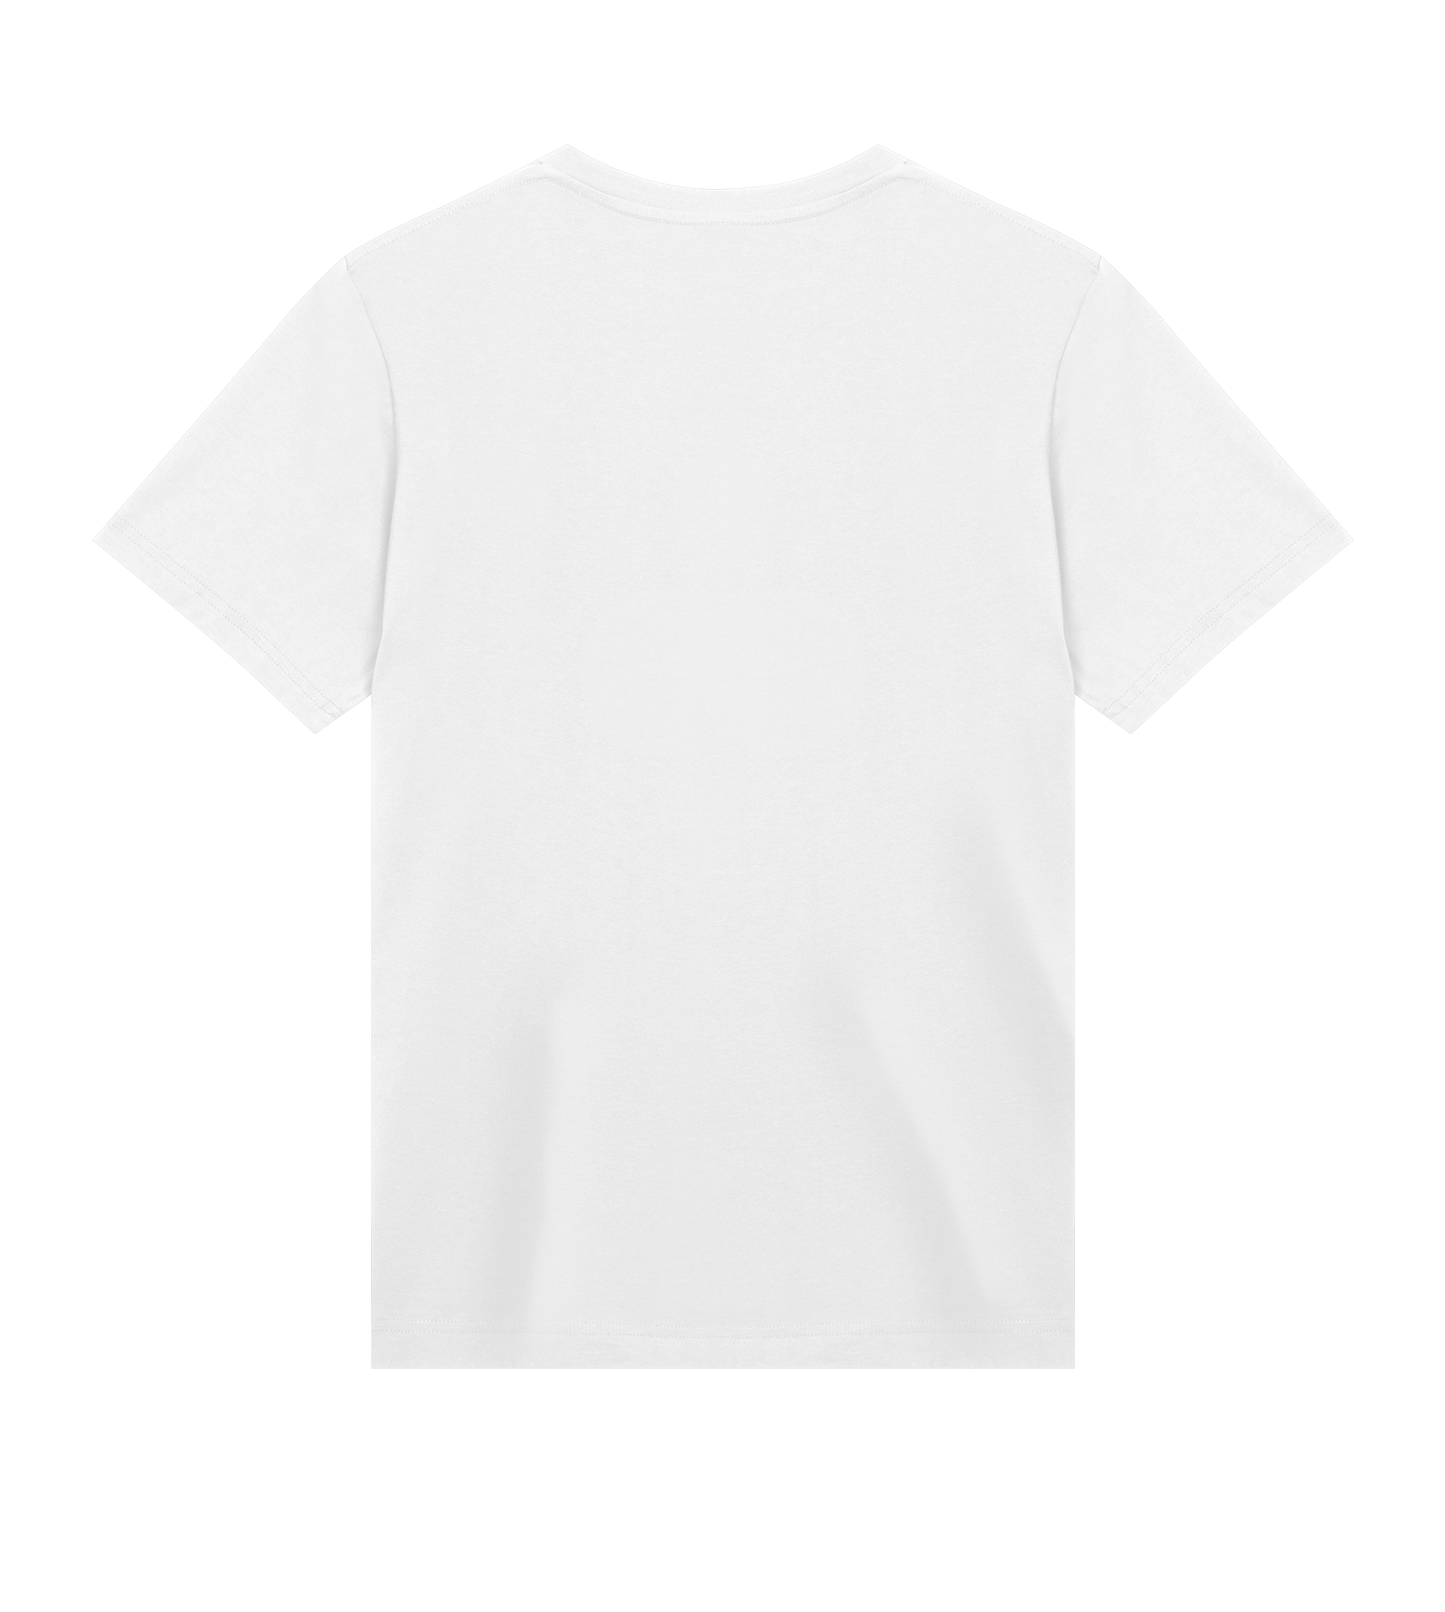 Xion - Fake Acid Mens T-shirt